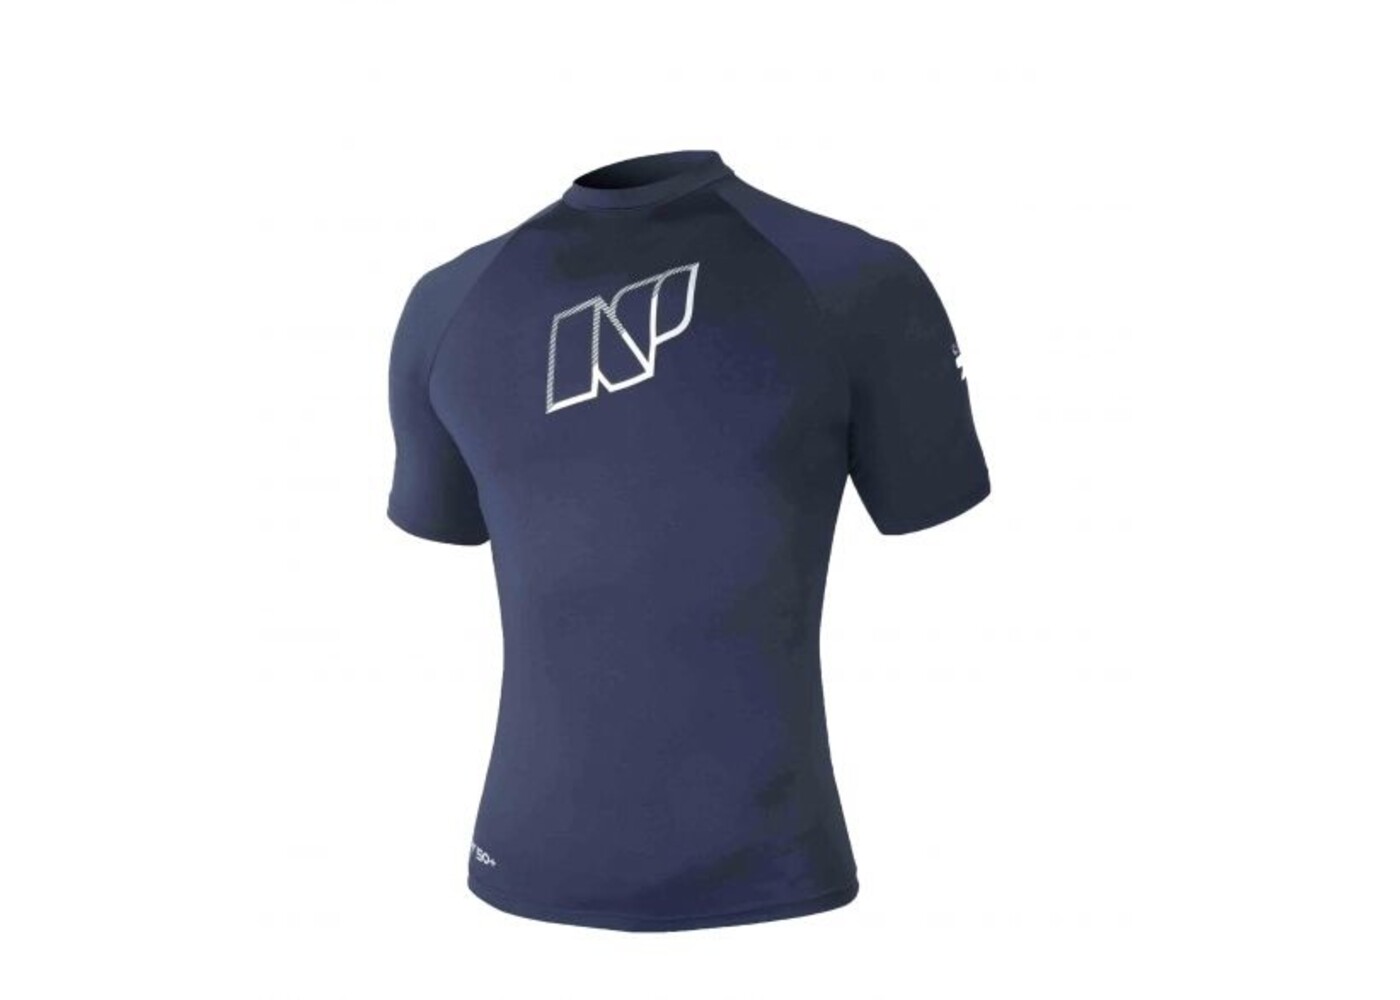 Stars Company Compression shirt blue short